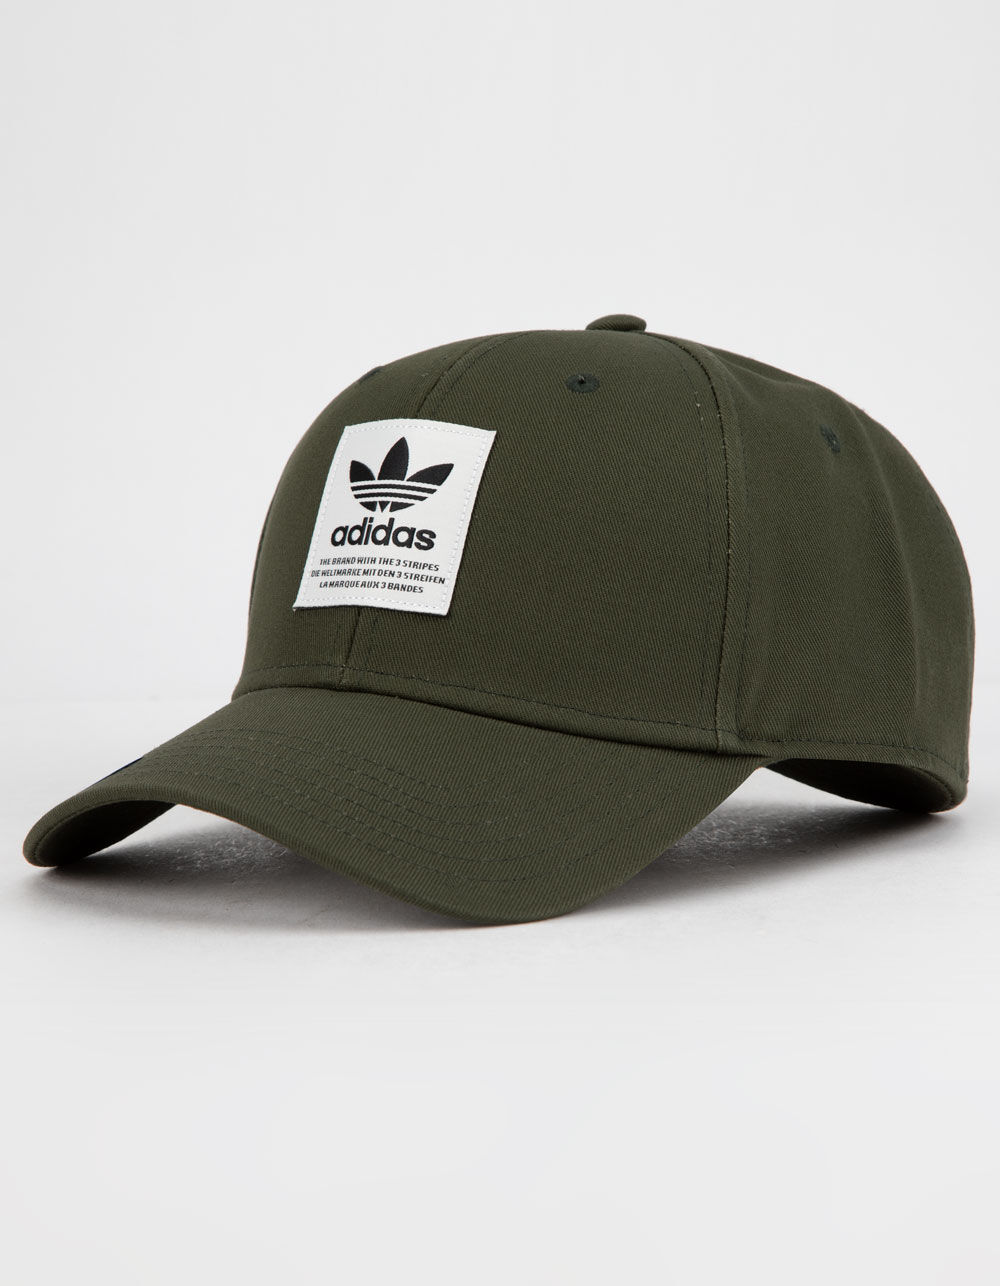 Adidas Mens Patch Snapback Hat - Green